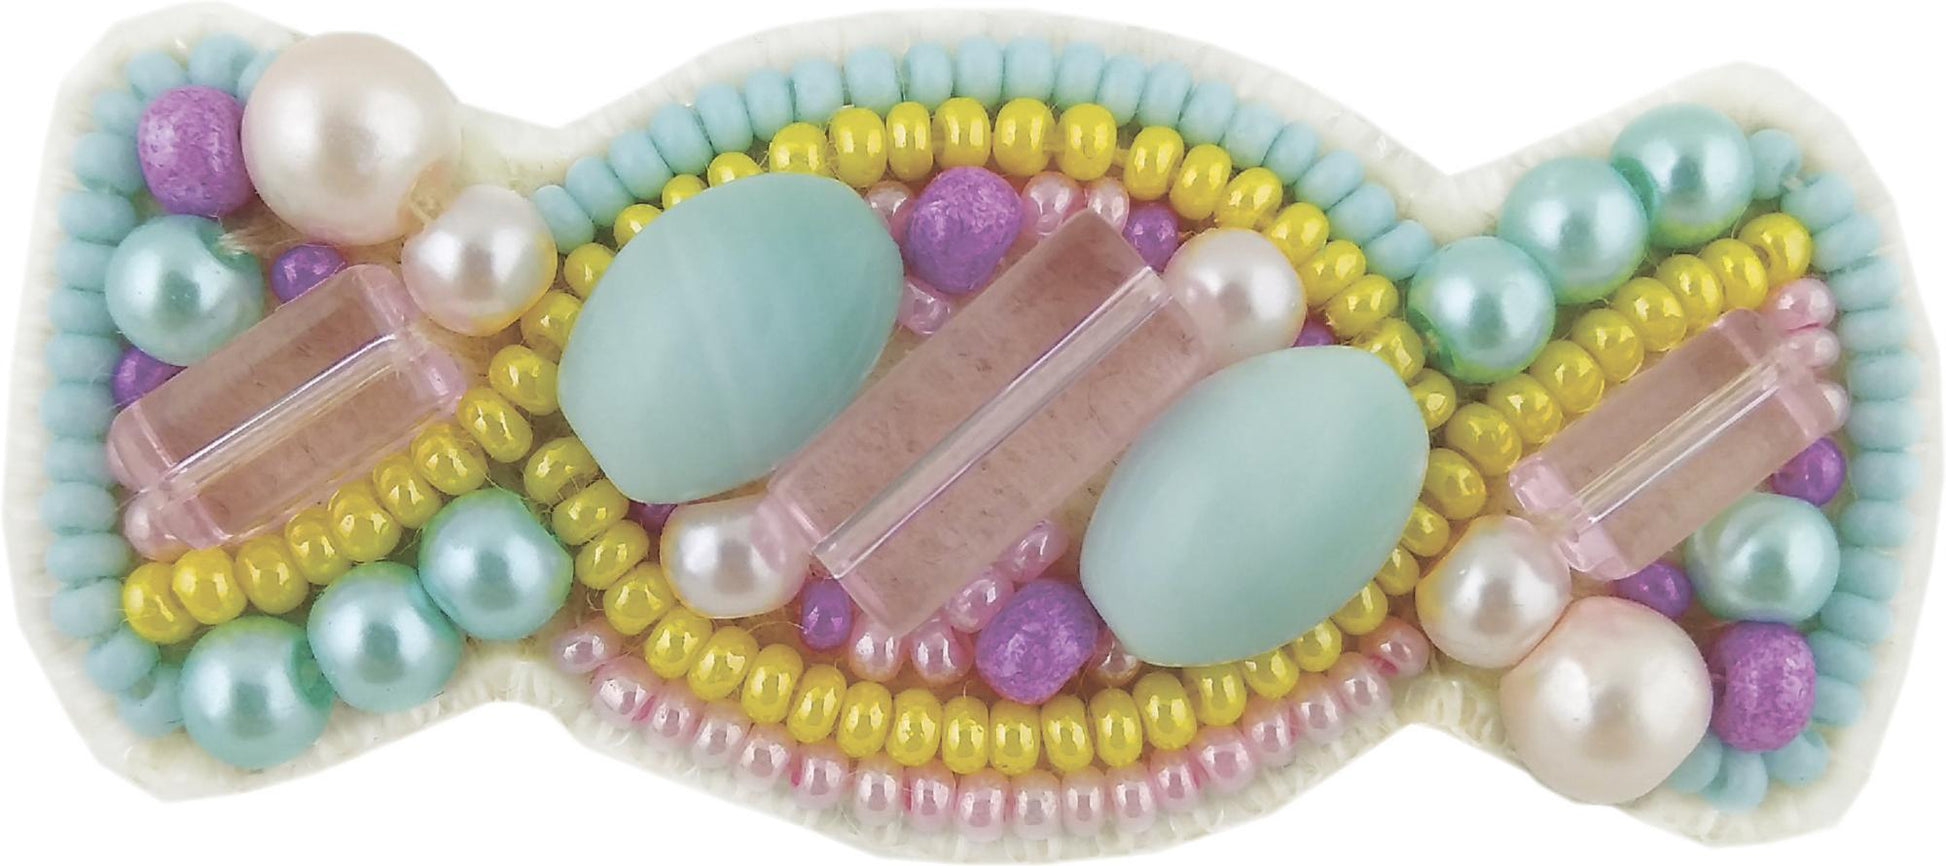 BP-250 Beadwork kit for creating broоch Crystal Art "Sweetie" - Leo Hobby